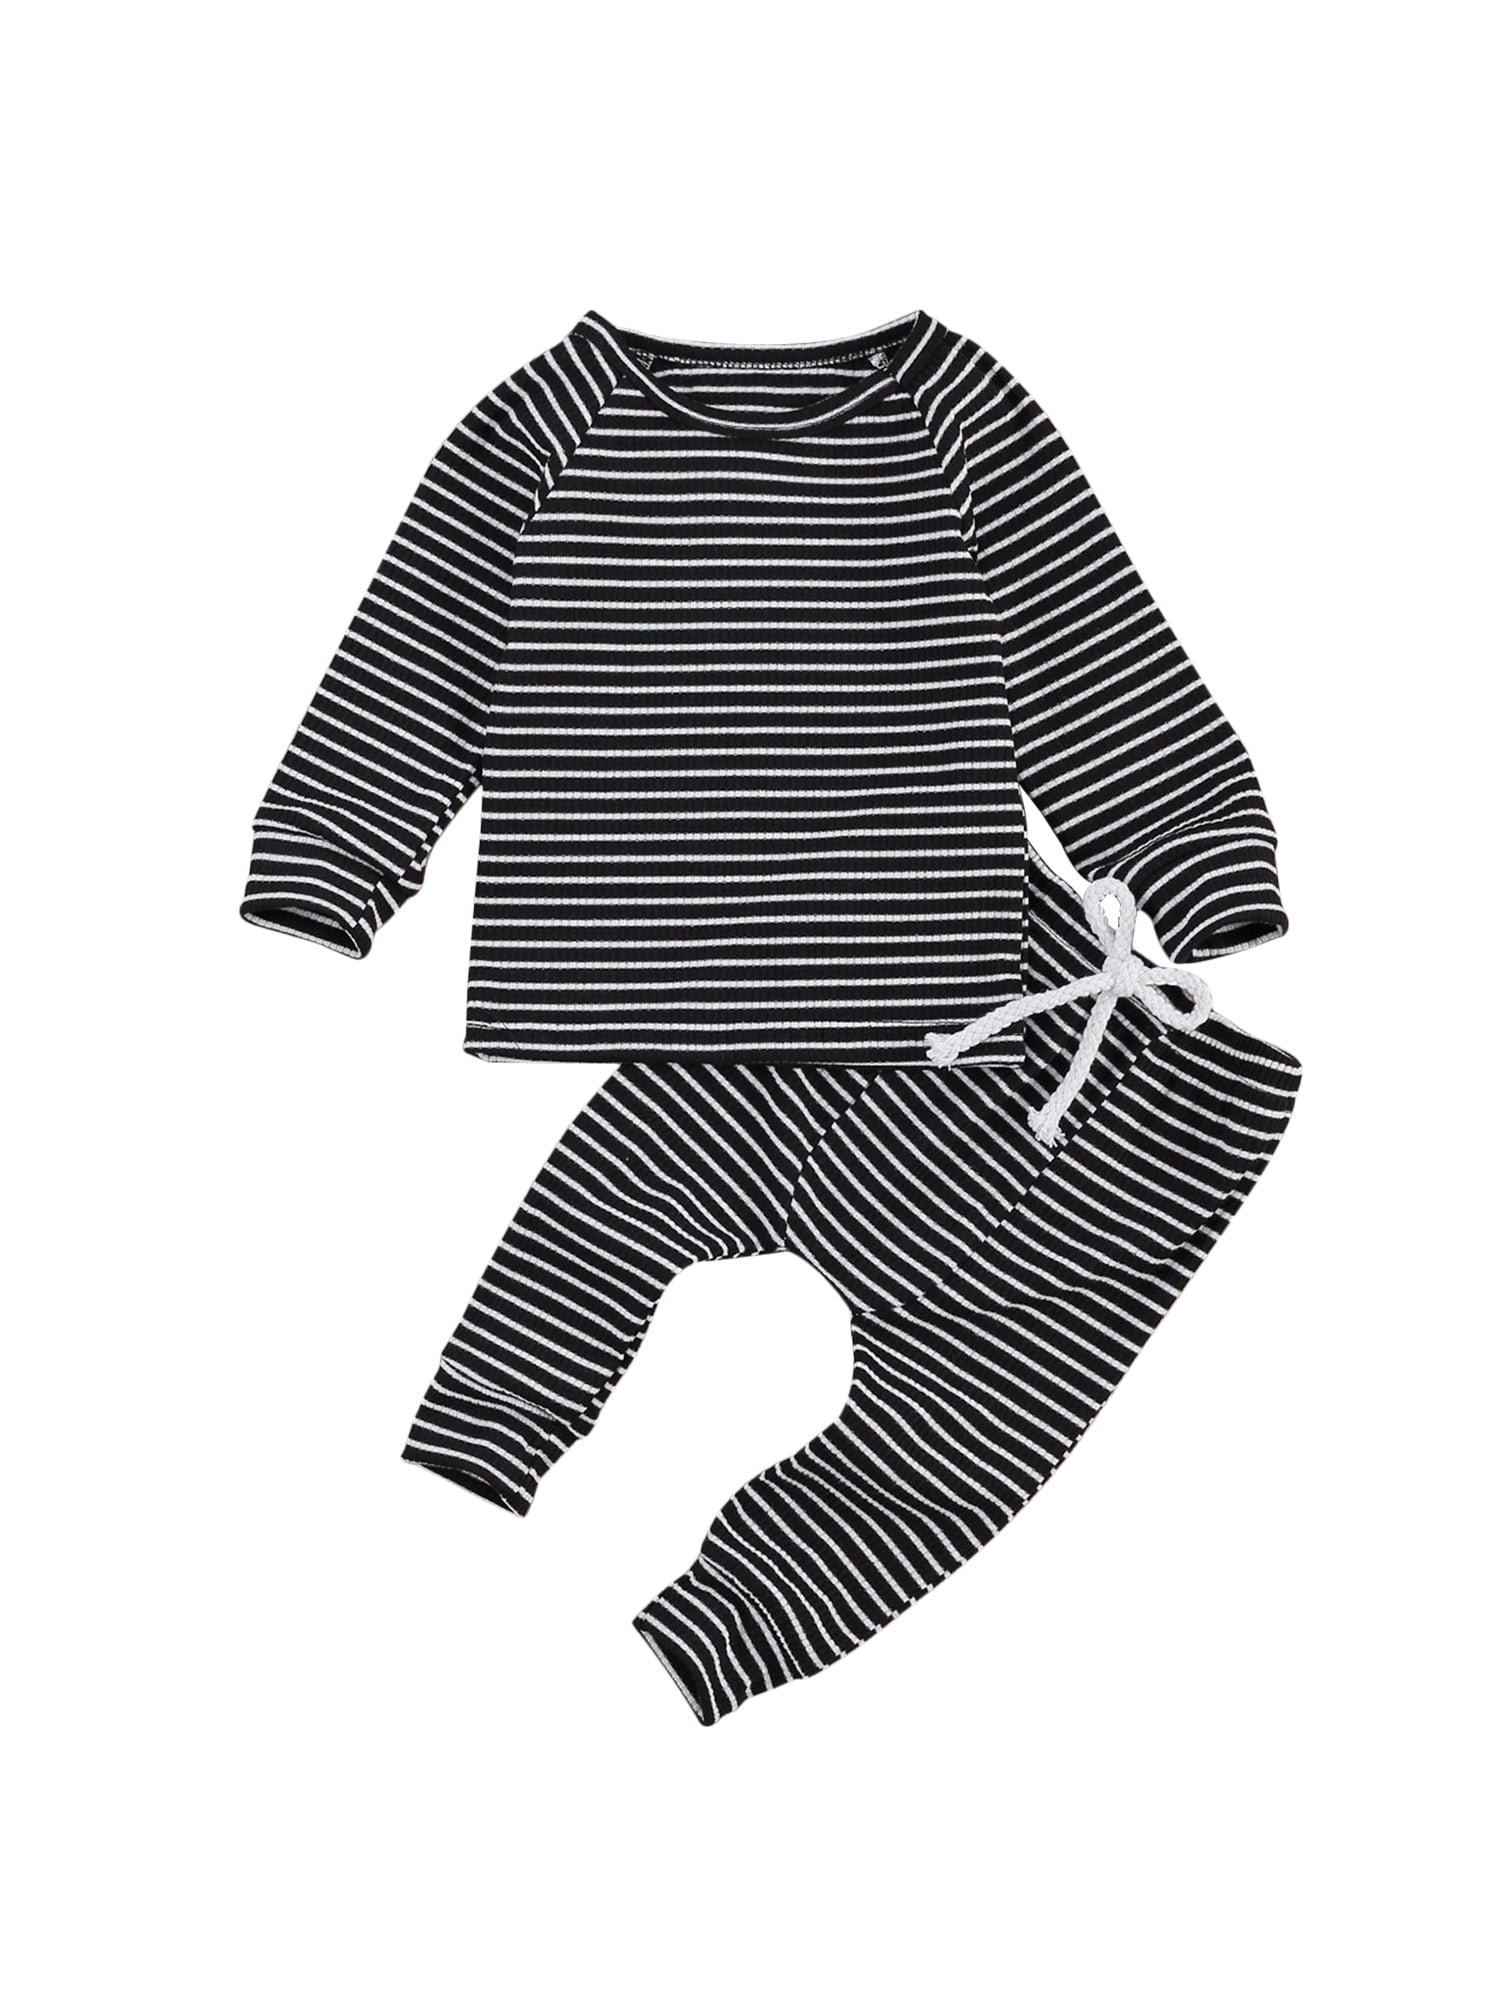 GuliriFei Baby 2 Piece Homewear Sets Long Sleeve Stripe Shirt Long Pant